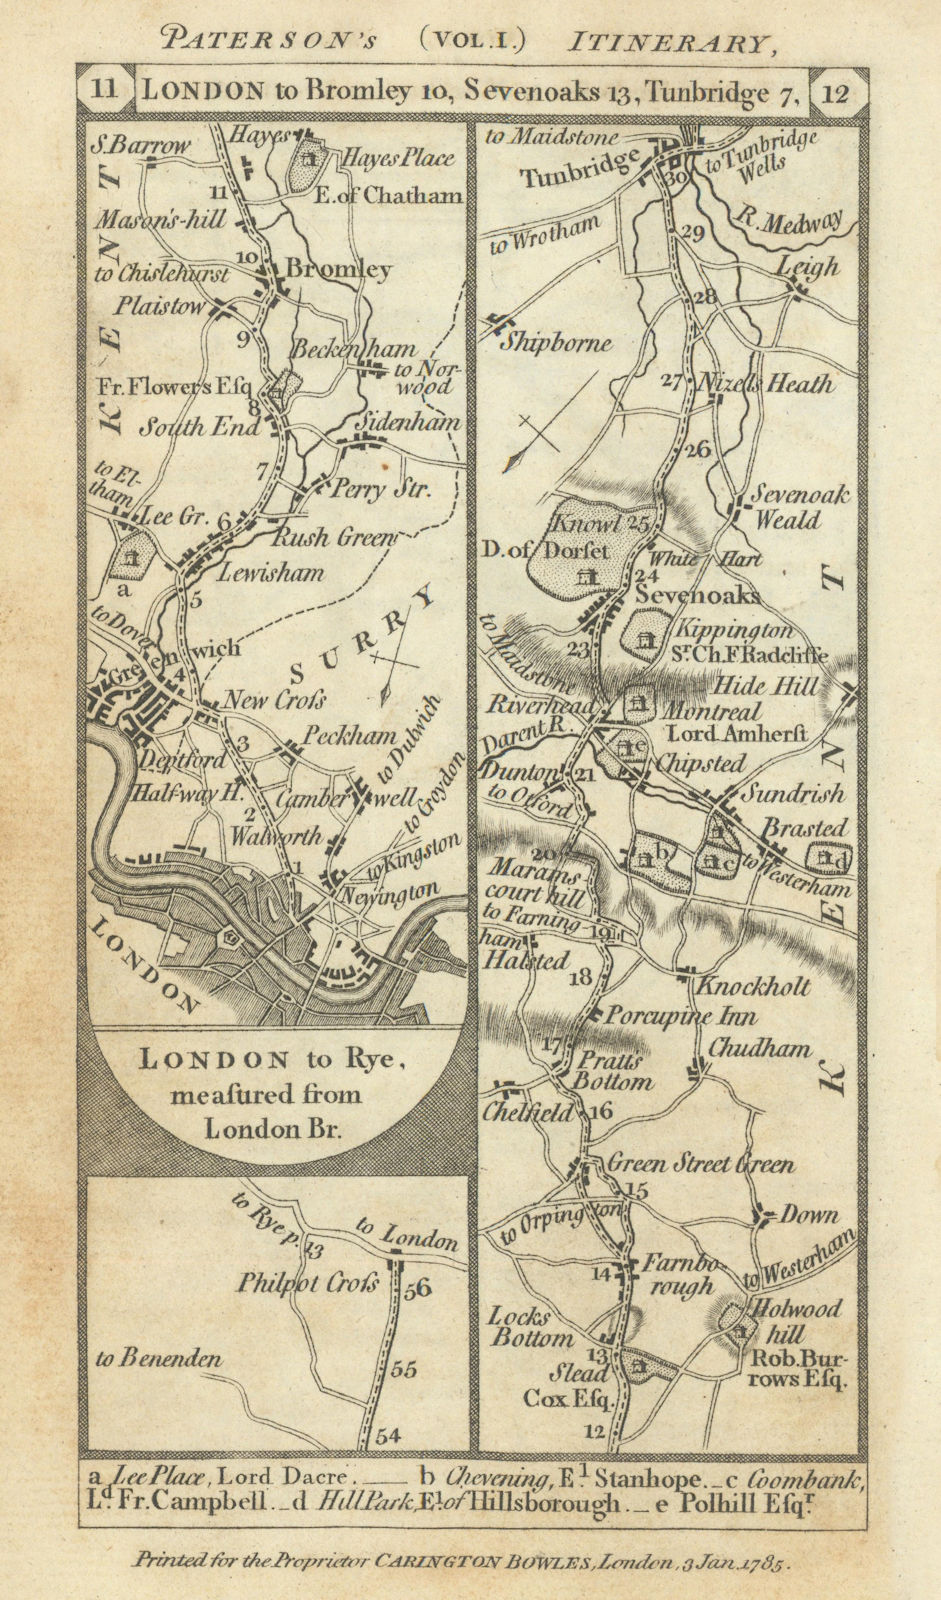 Greenwich-Lewisham-Bromley-Sevenoaks-Tunbridge road strip map PATERSON 1785